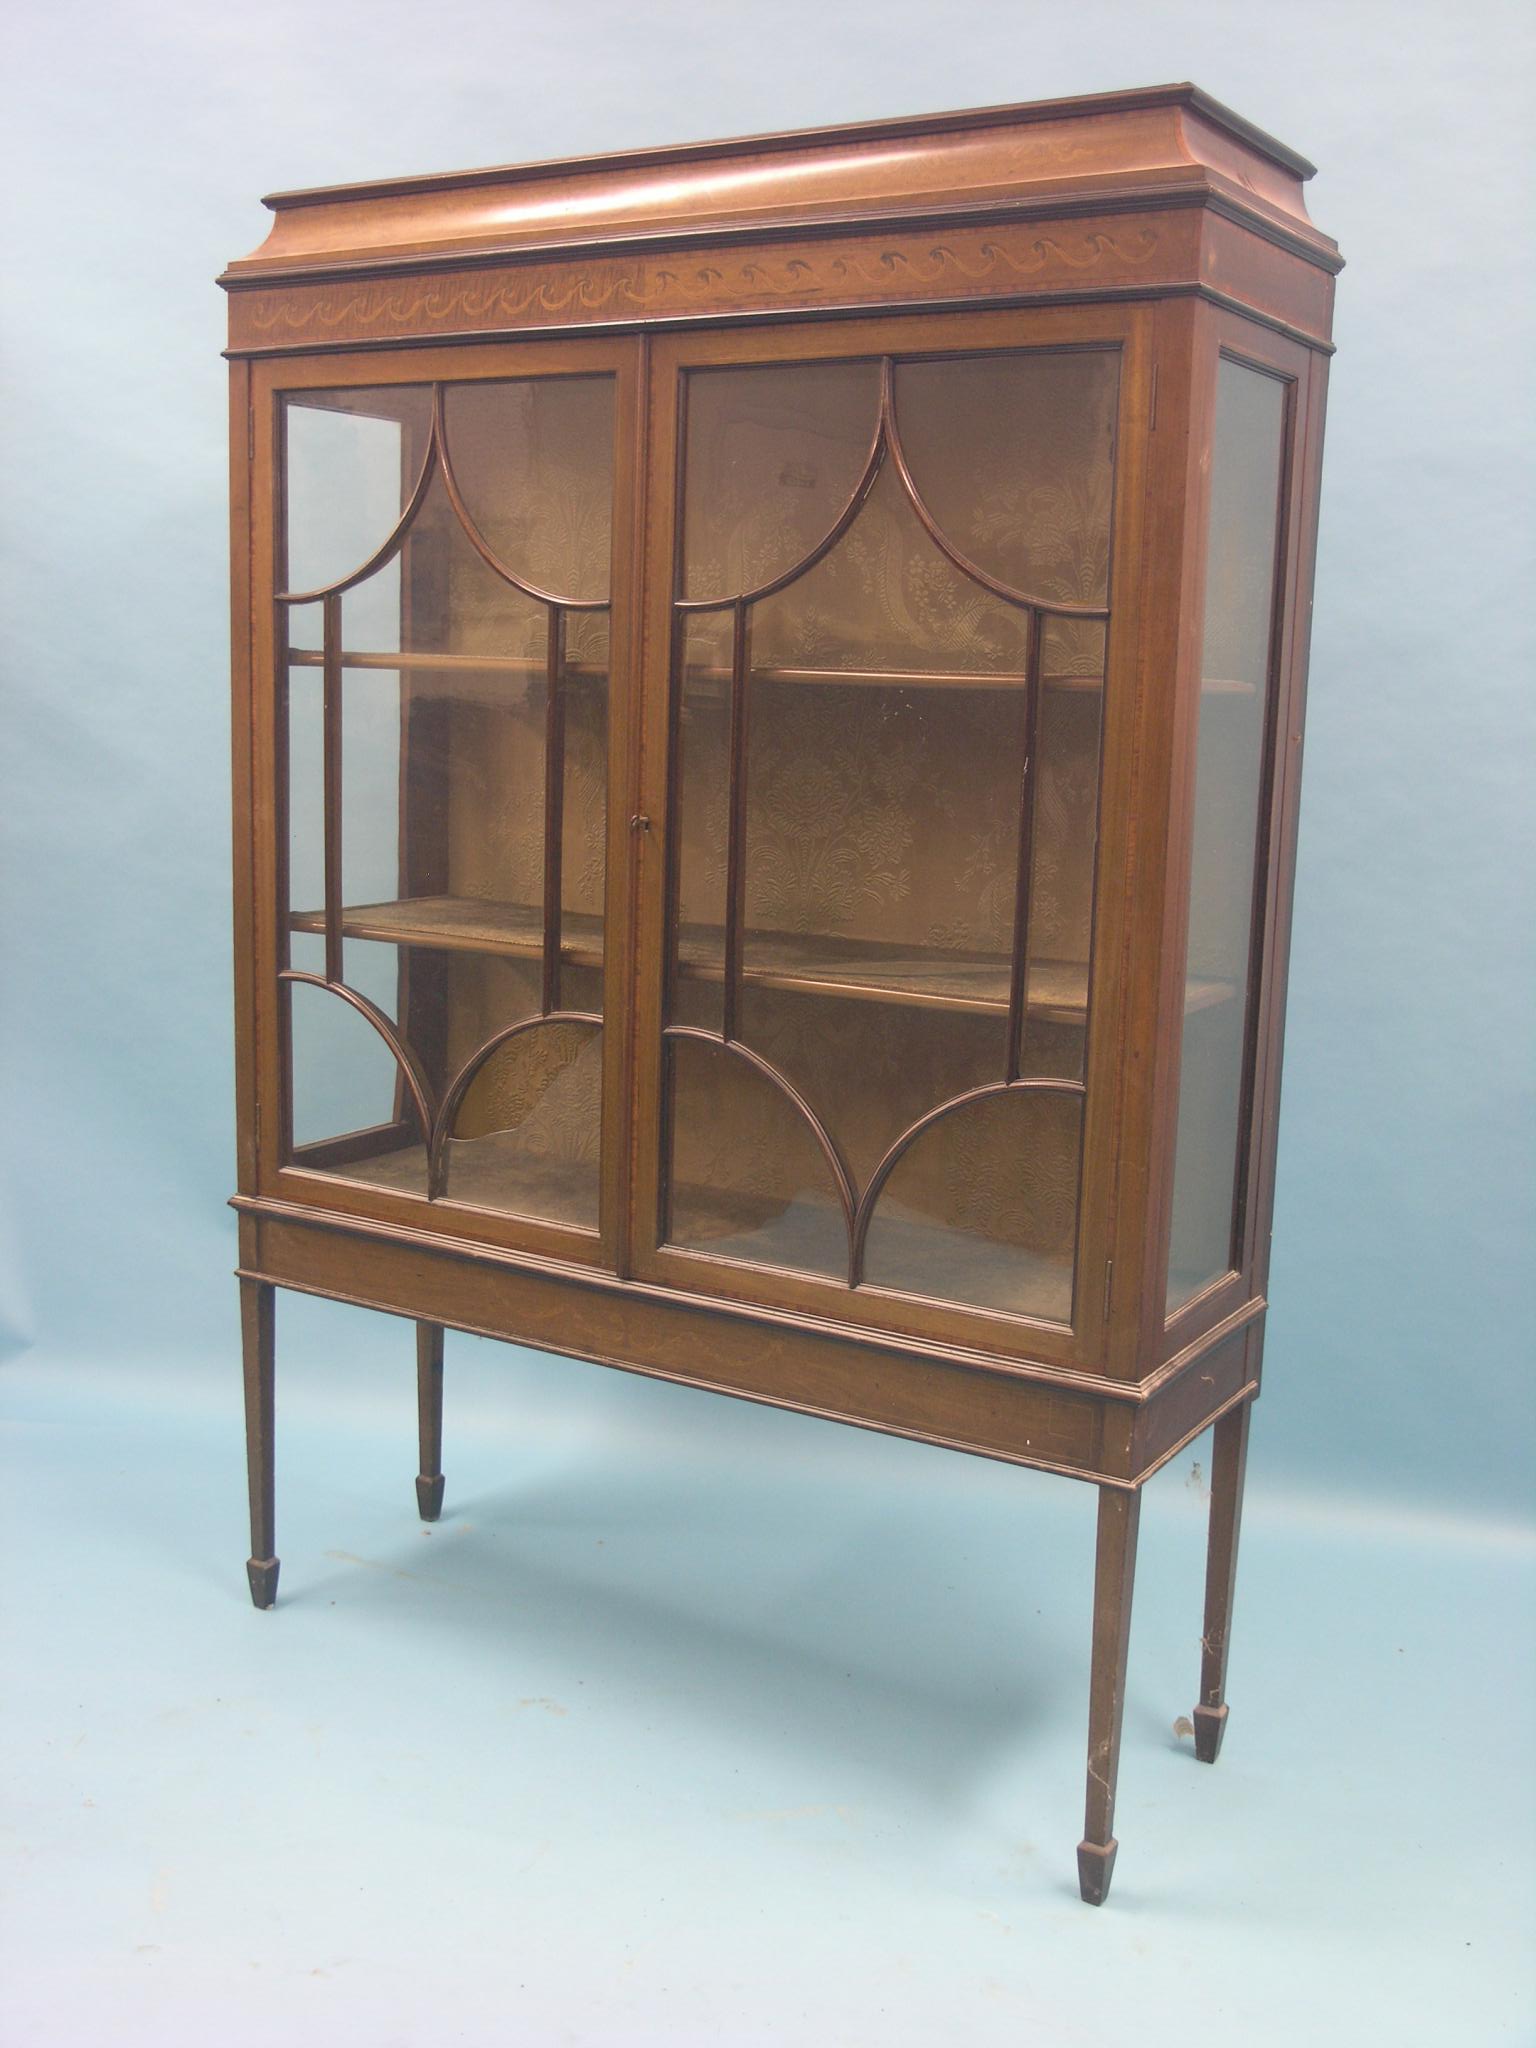 An Edwardian inlaid mahogany display cabinet, pair of astragal-glazed doors enclosing lined interior